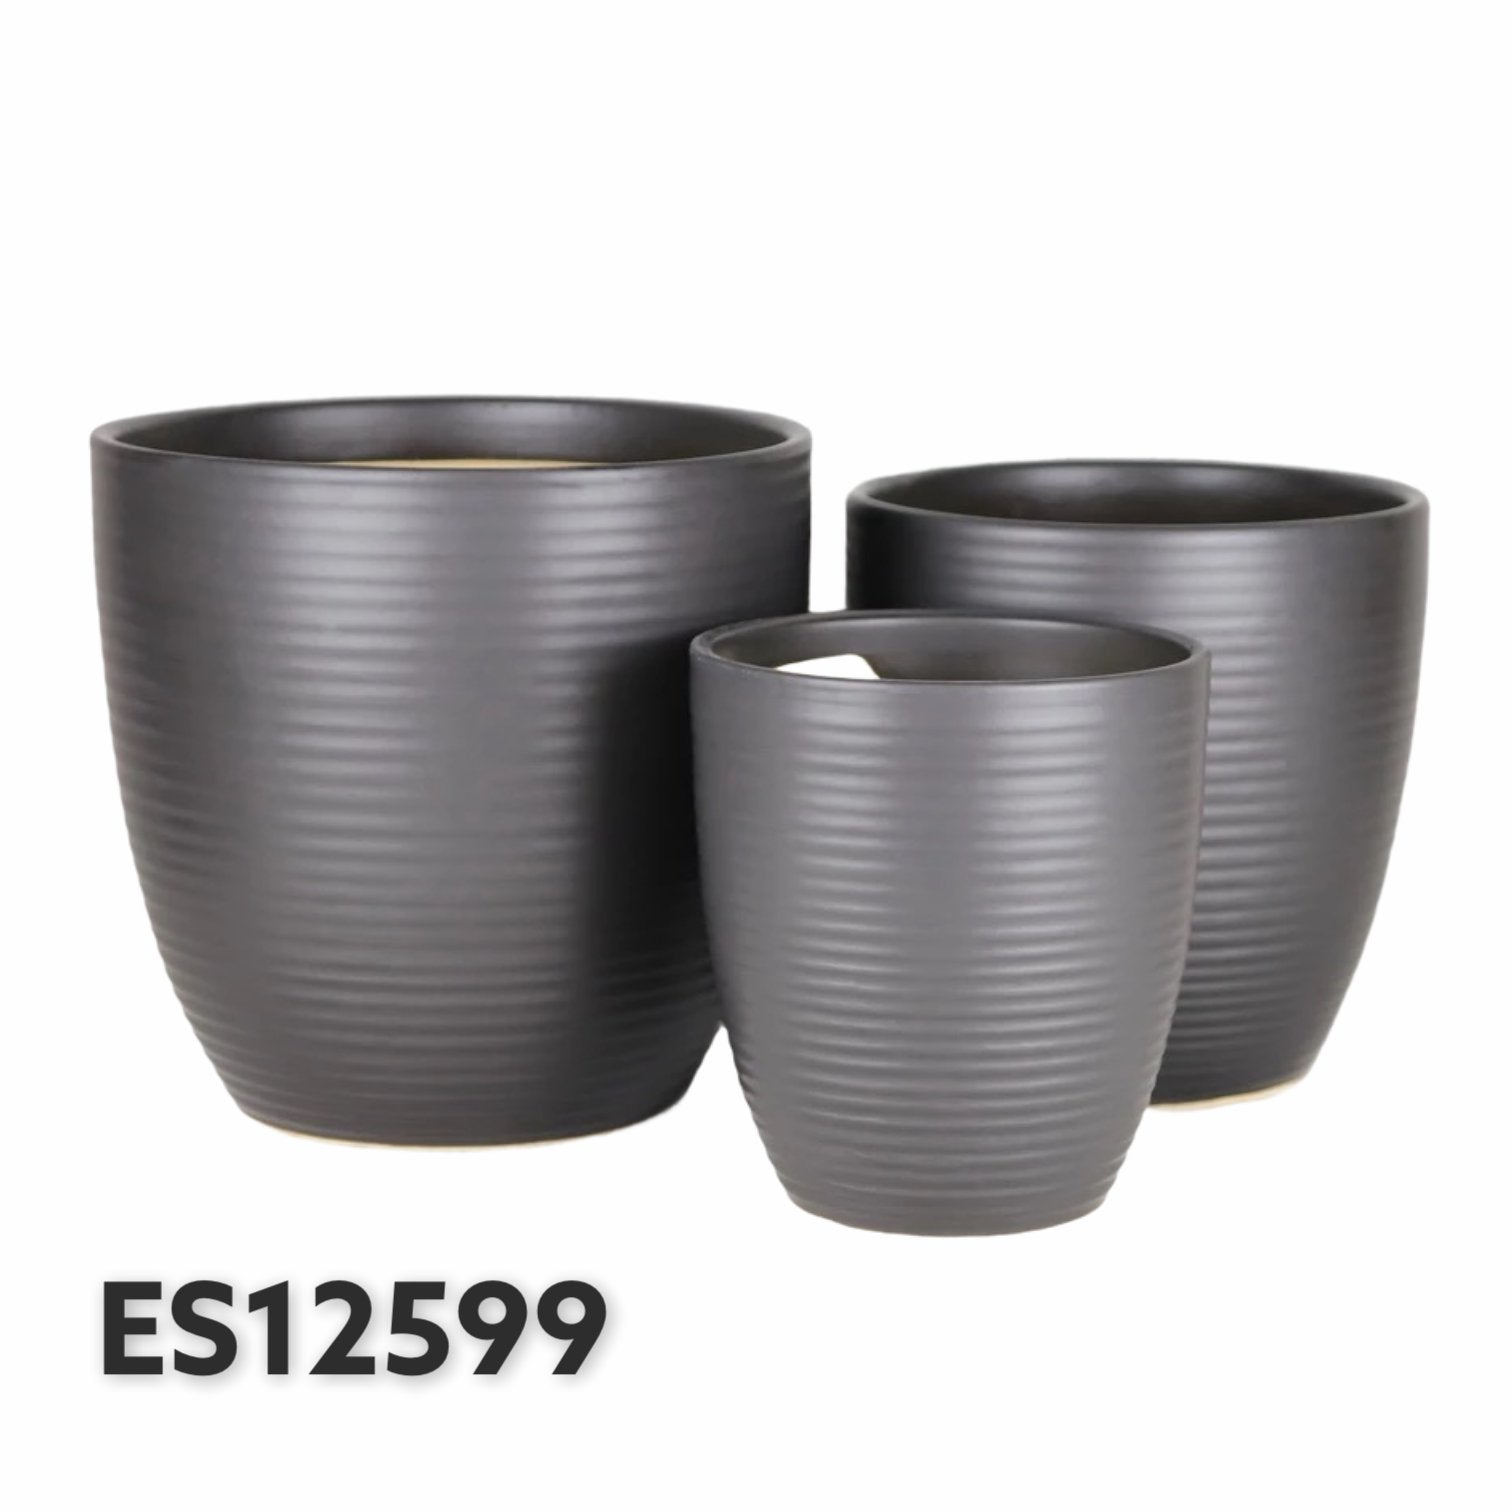 ES1259 Glazed Clay Ceramic Pot - Pots For Plants